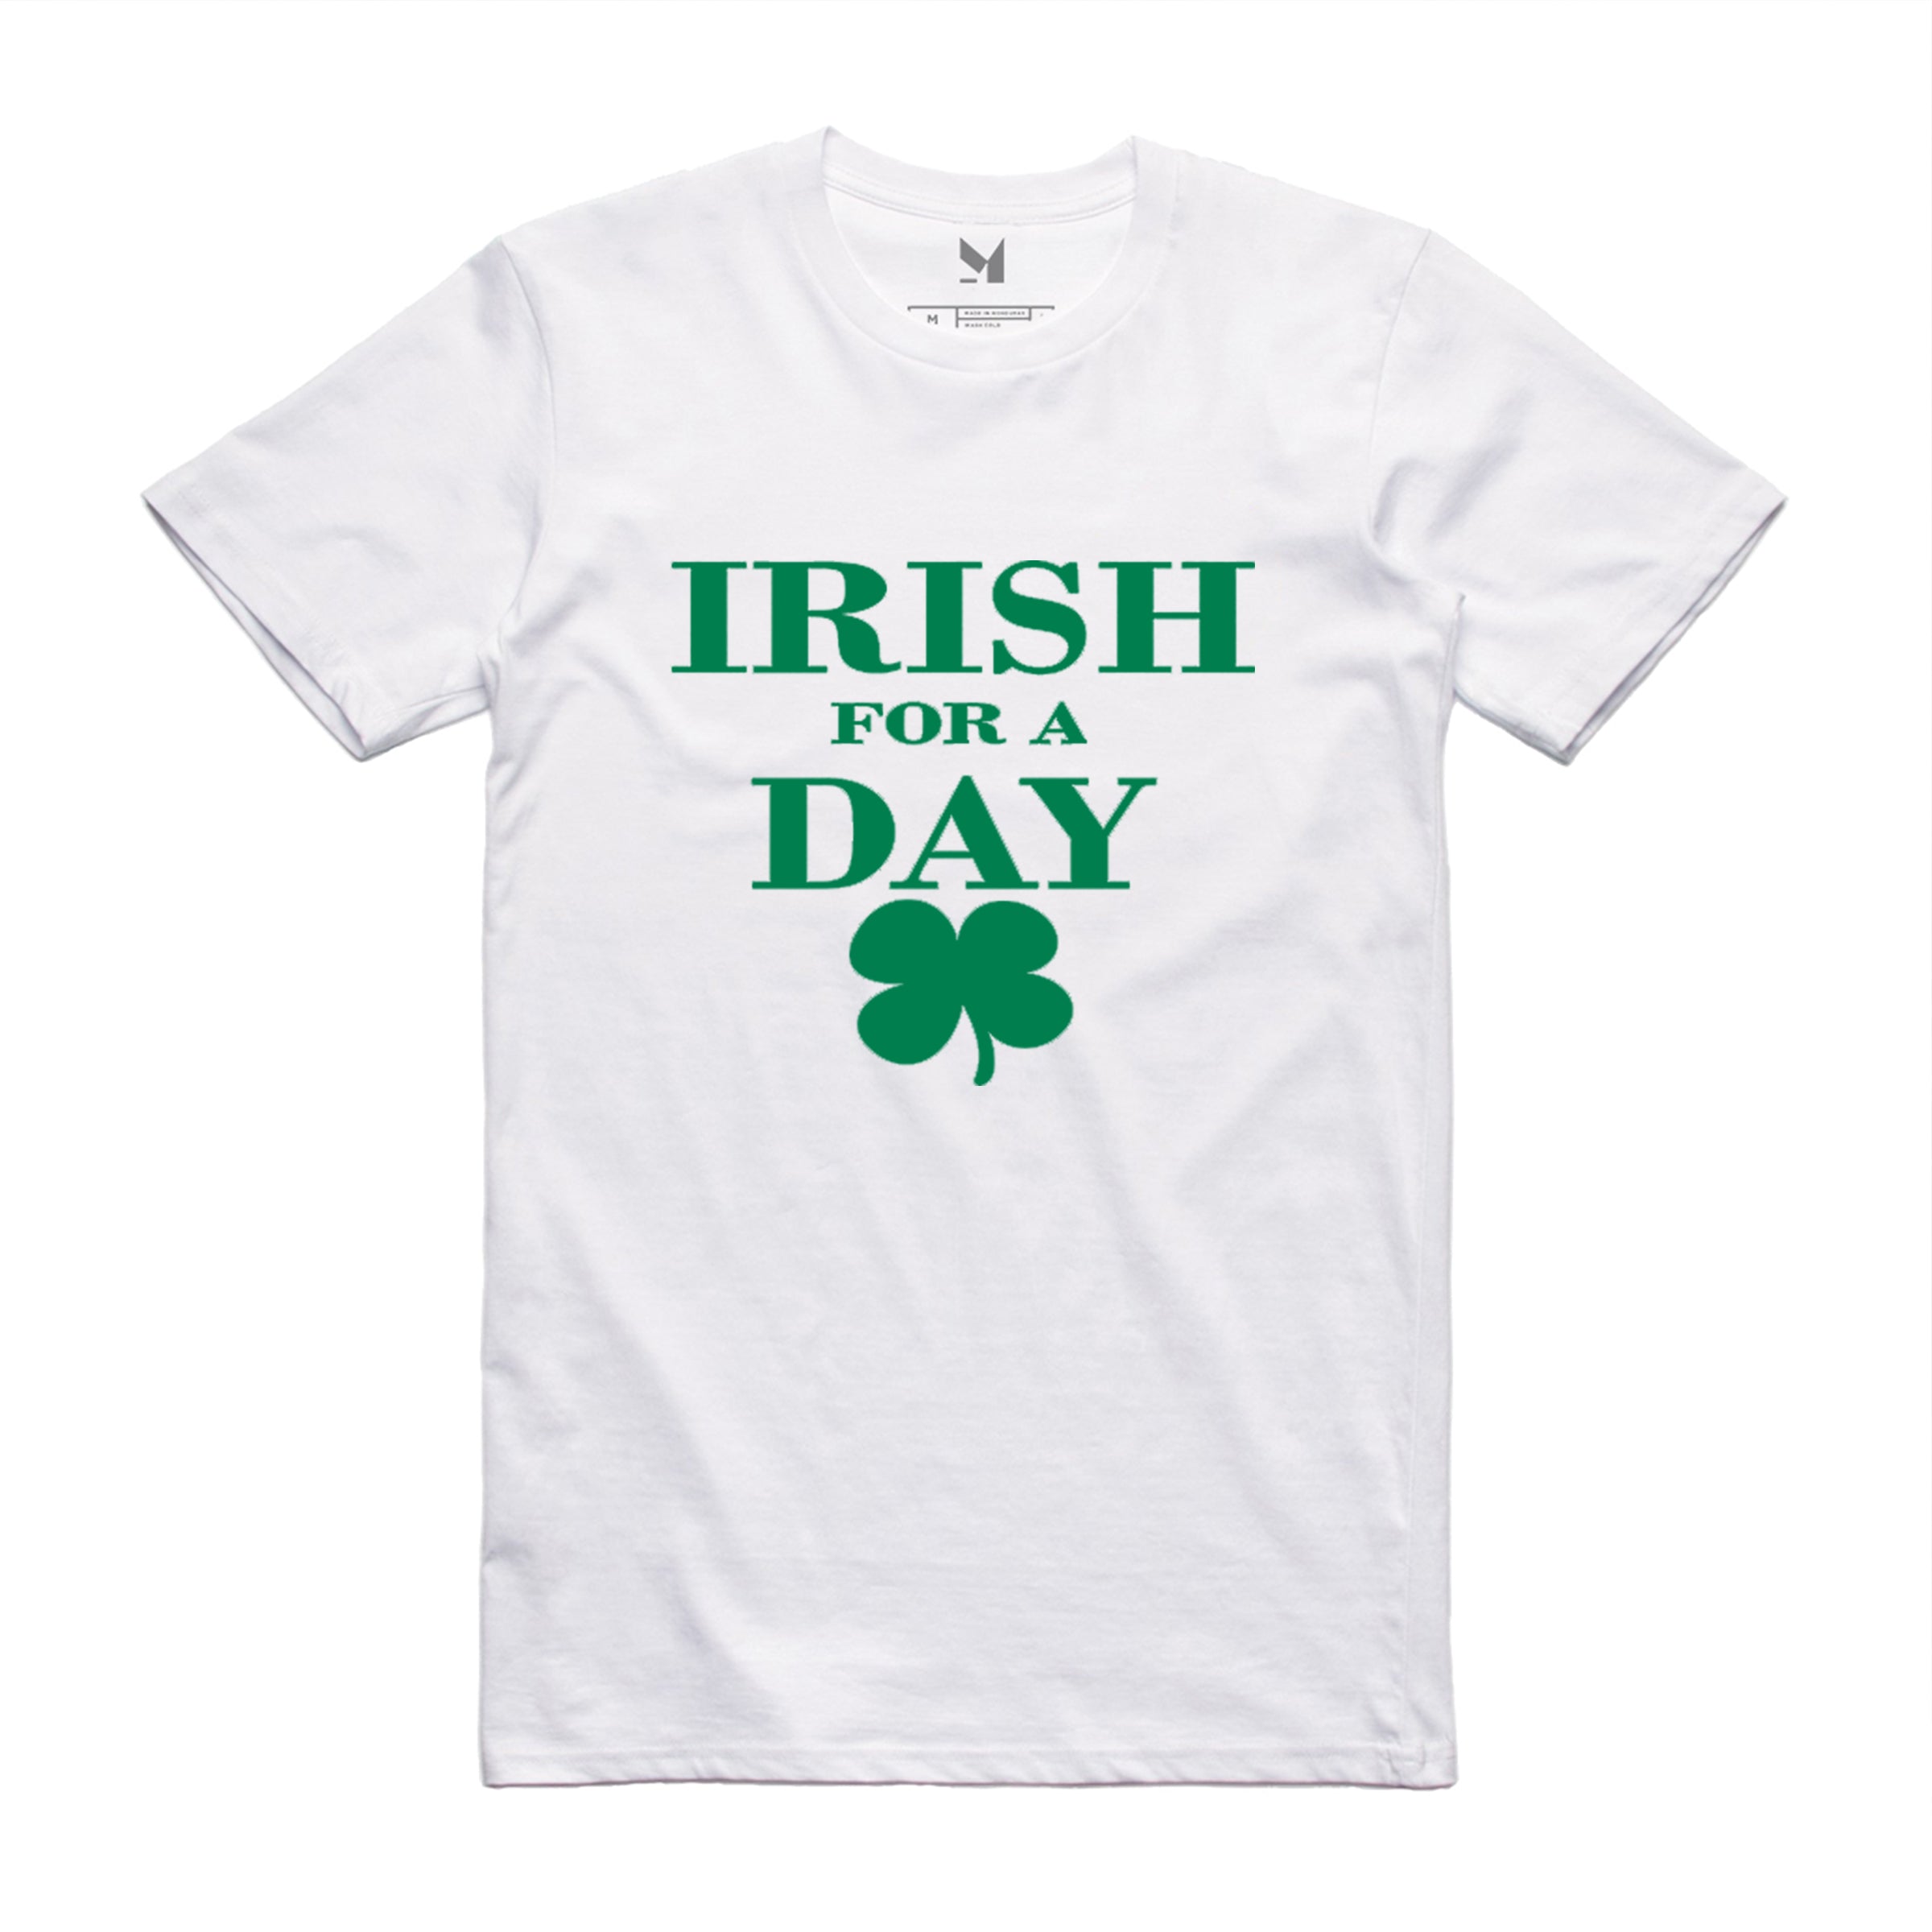 IRISH FOR A DAY TSHIRT